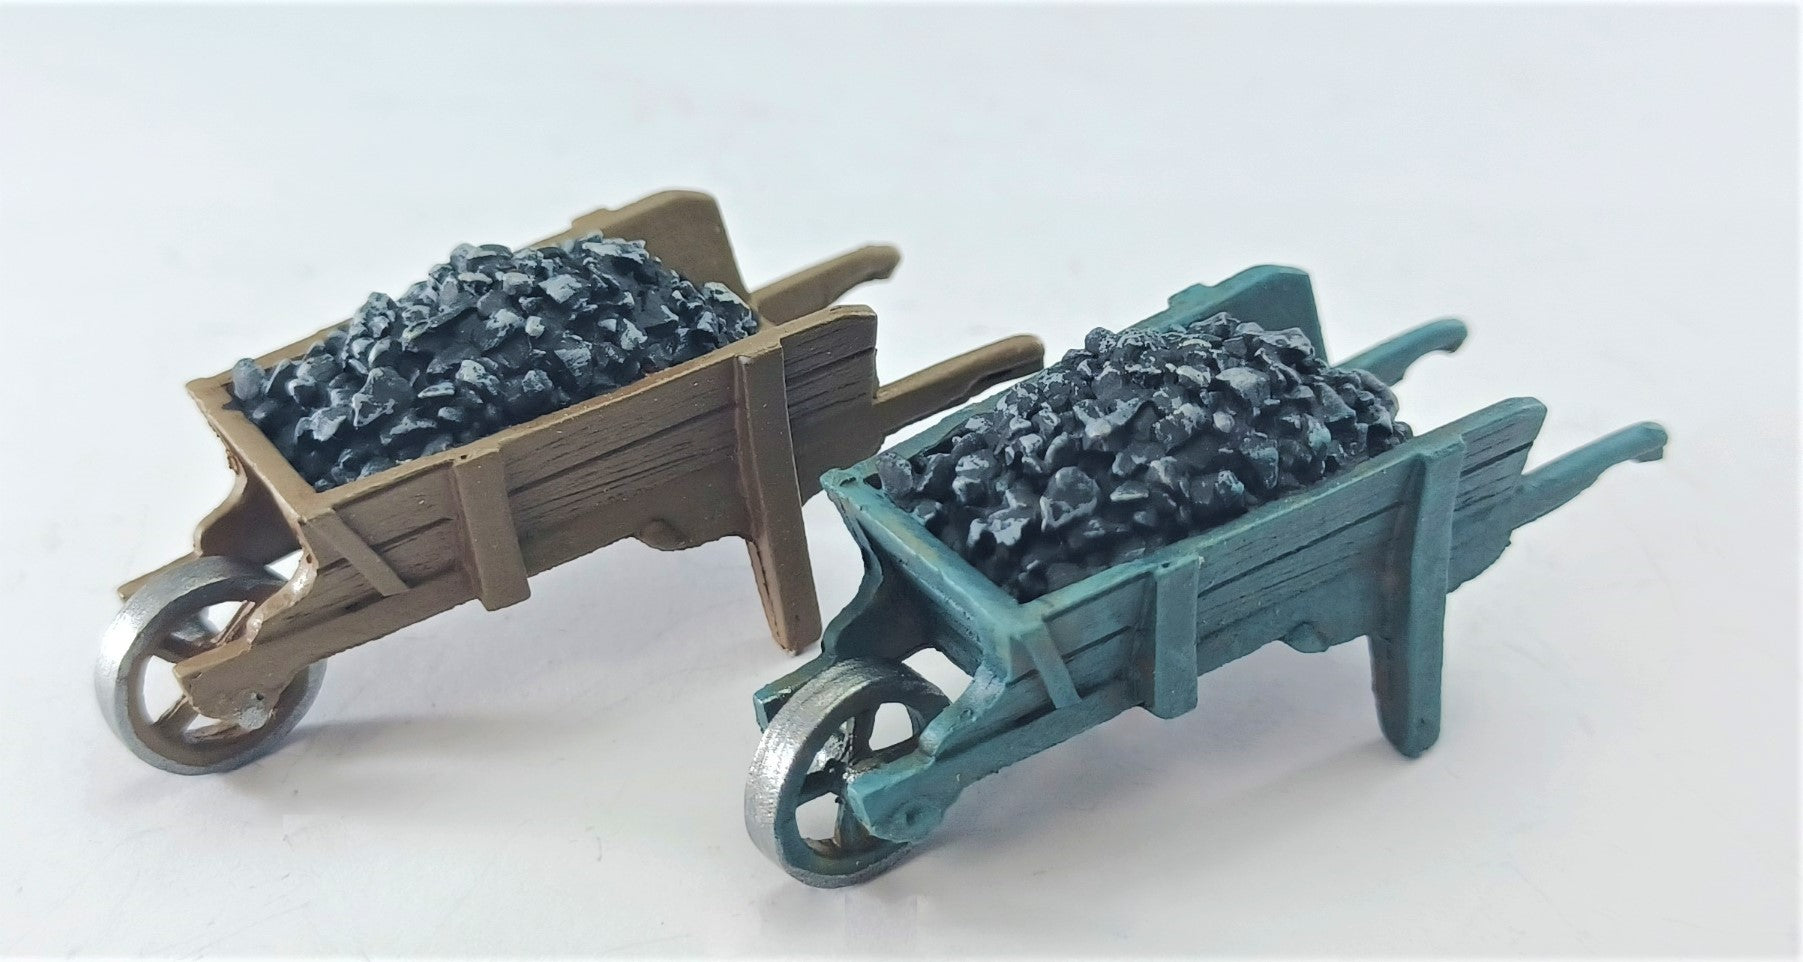 2 Wooden Wheelbarrows - Course Mineral Load